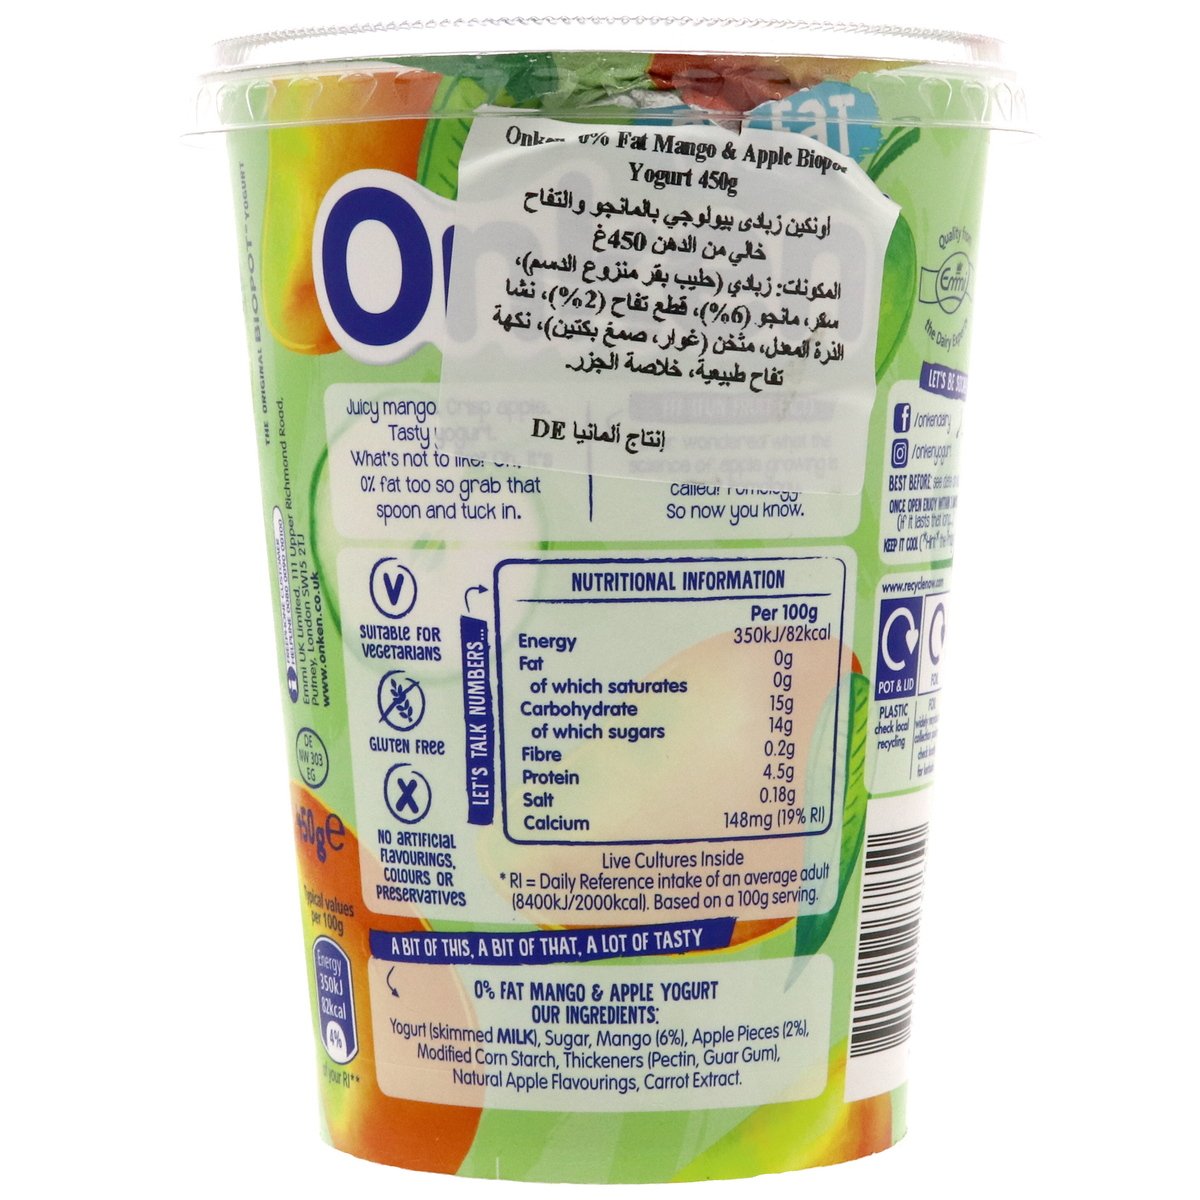 Onken Mango & Apple Biopot Yoghurt Fat Free 450 g